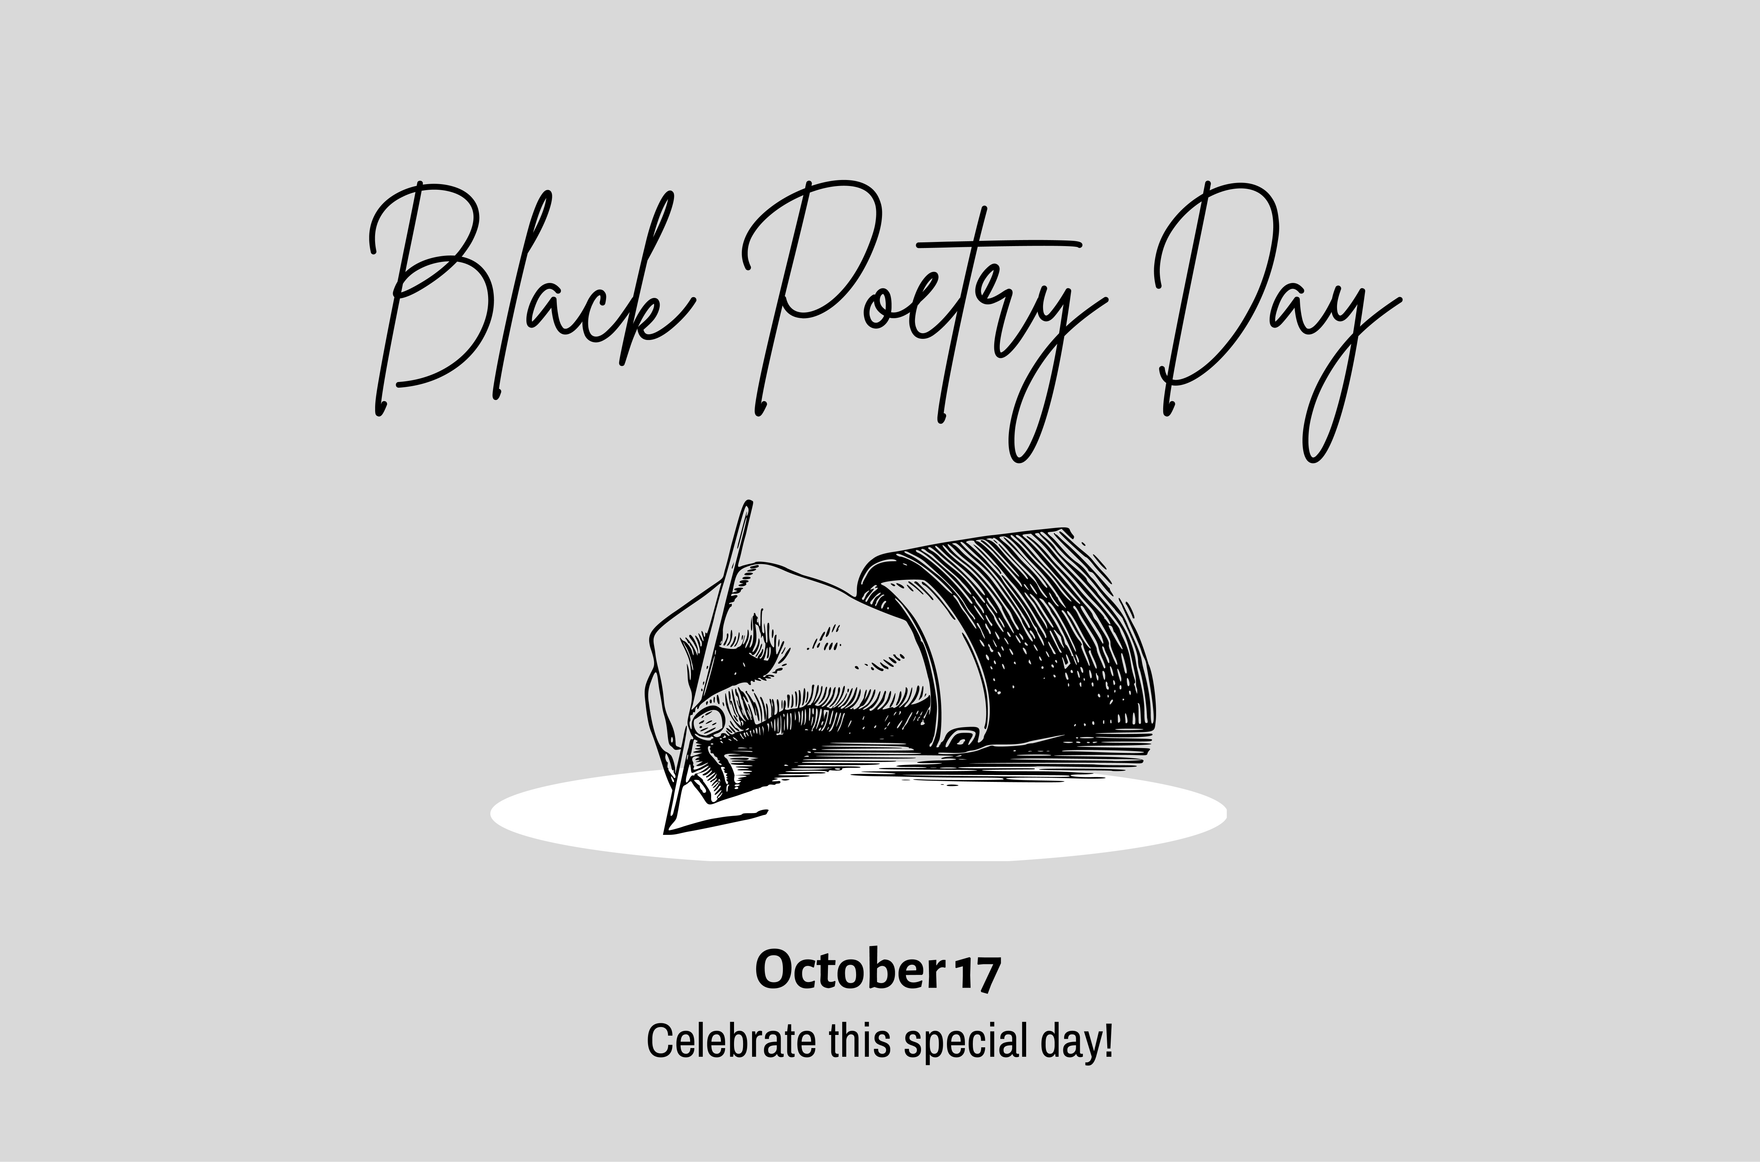 Black Poetry Day Banner in Illustrator, PSD, EPS, SVG, JPG, PNG